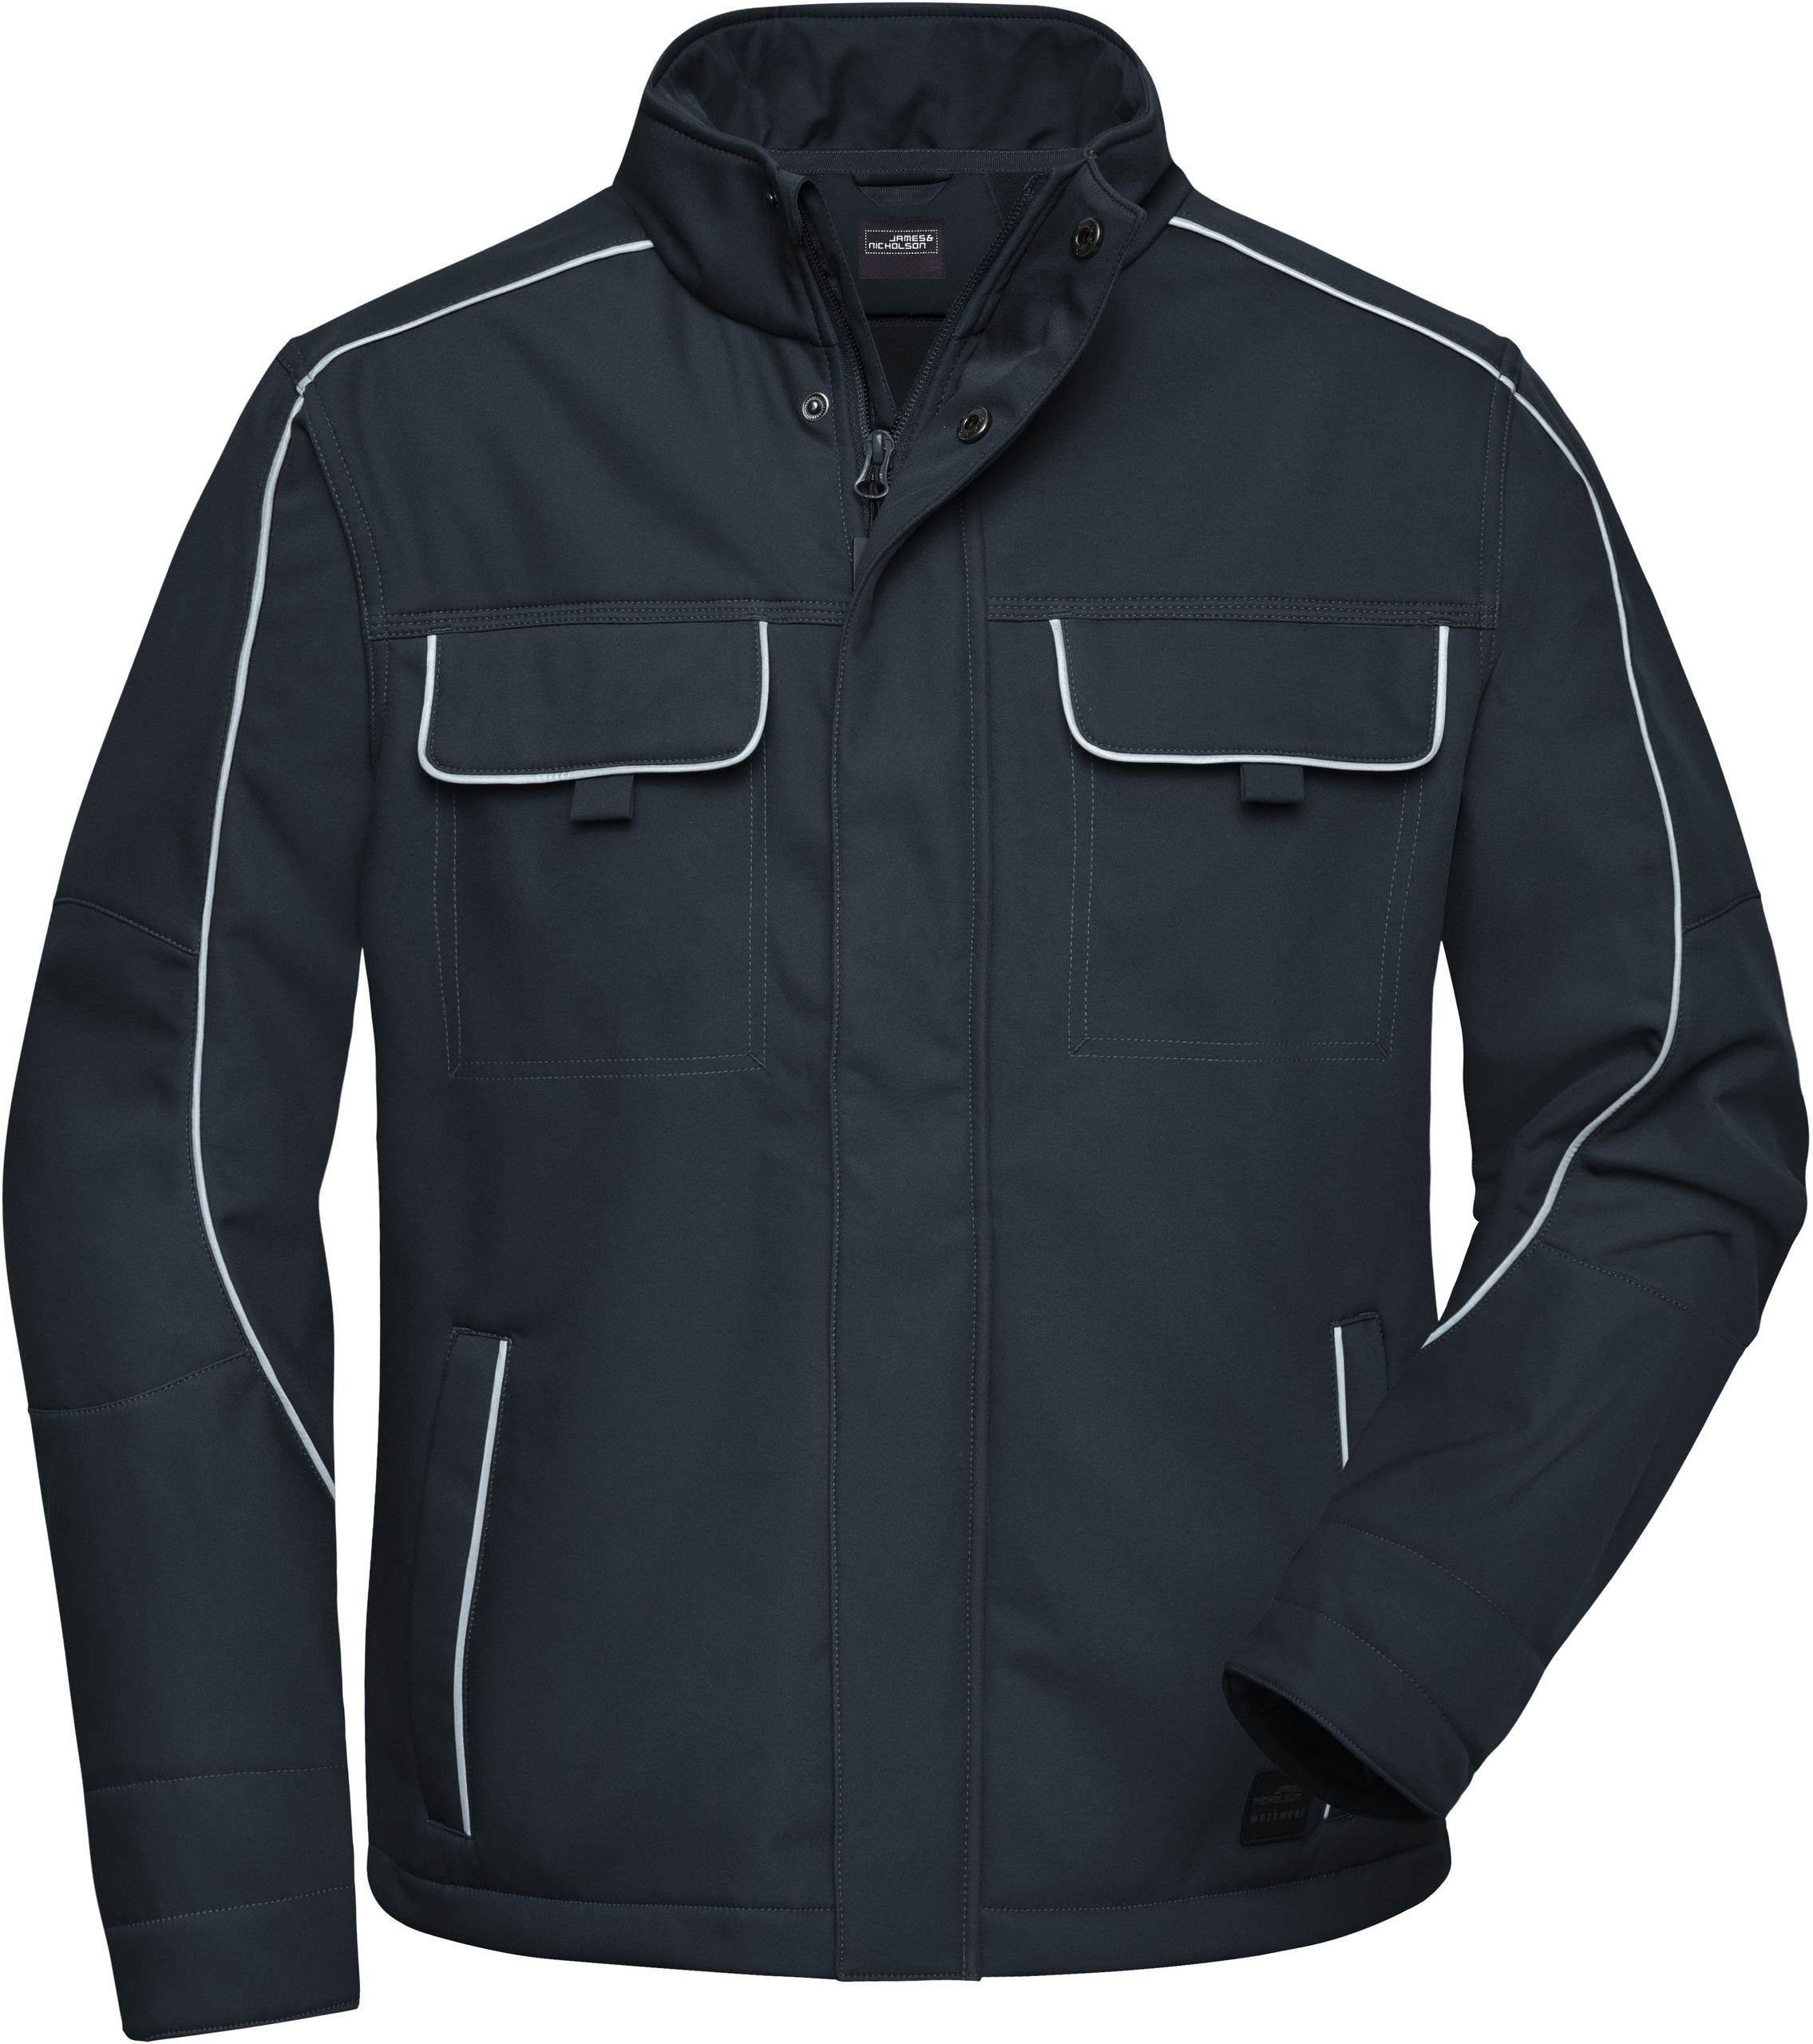 James & Übergröße Softshell Softshelljacke Nicholson FaS50884 in Carbon Workwear auch Jacke